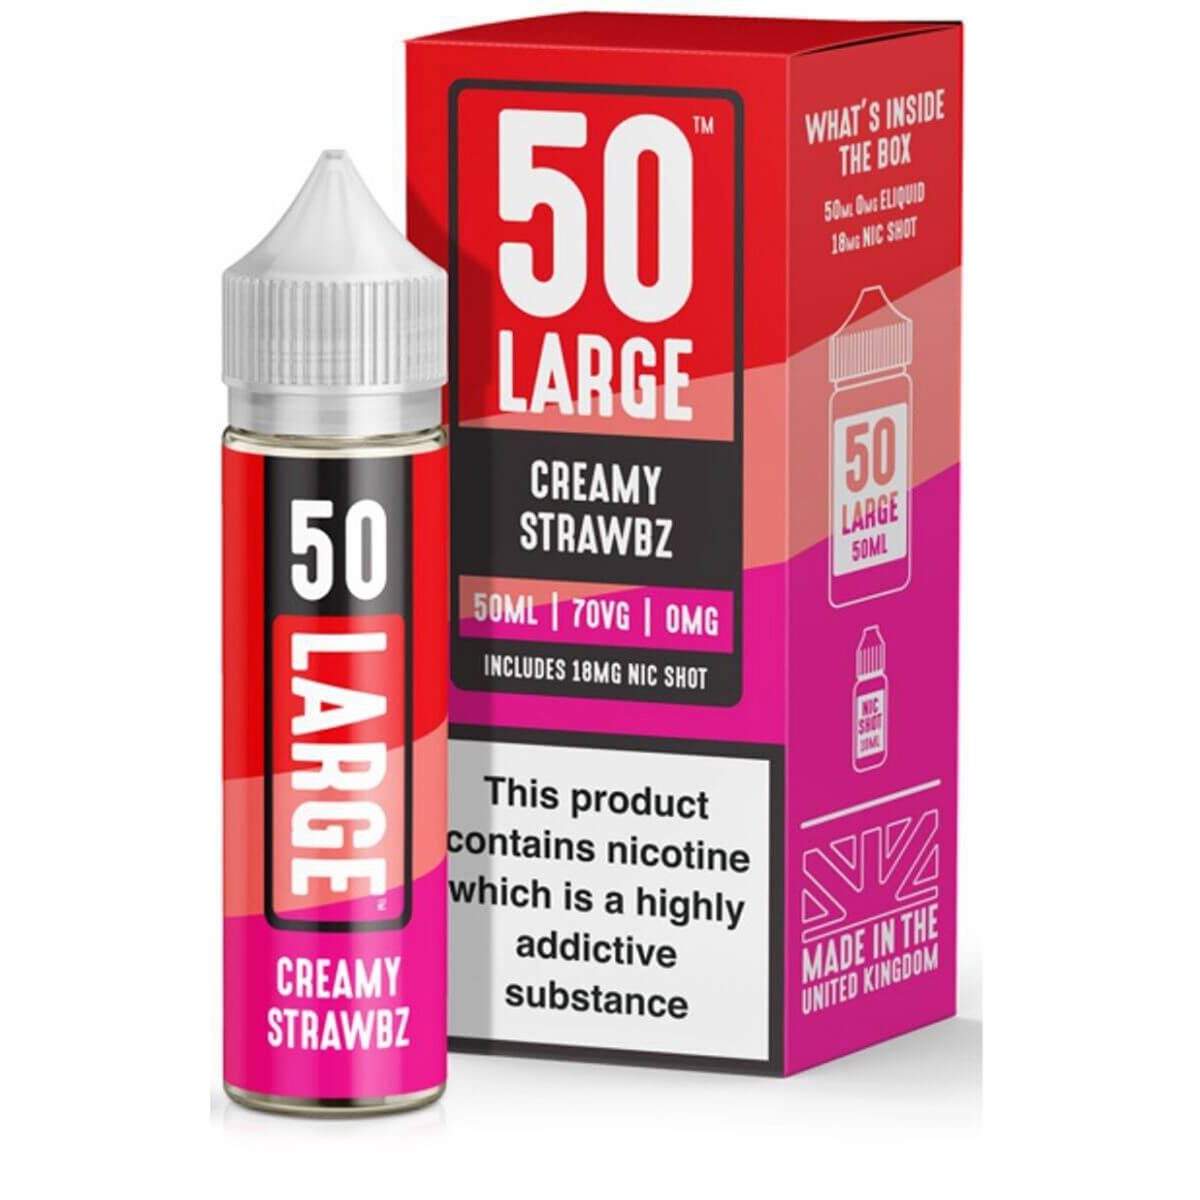 50 large creamy strawbz 50ml shortfill e-liquid includes nic shot, available at dispergo vaping uk